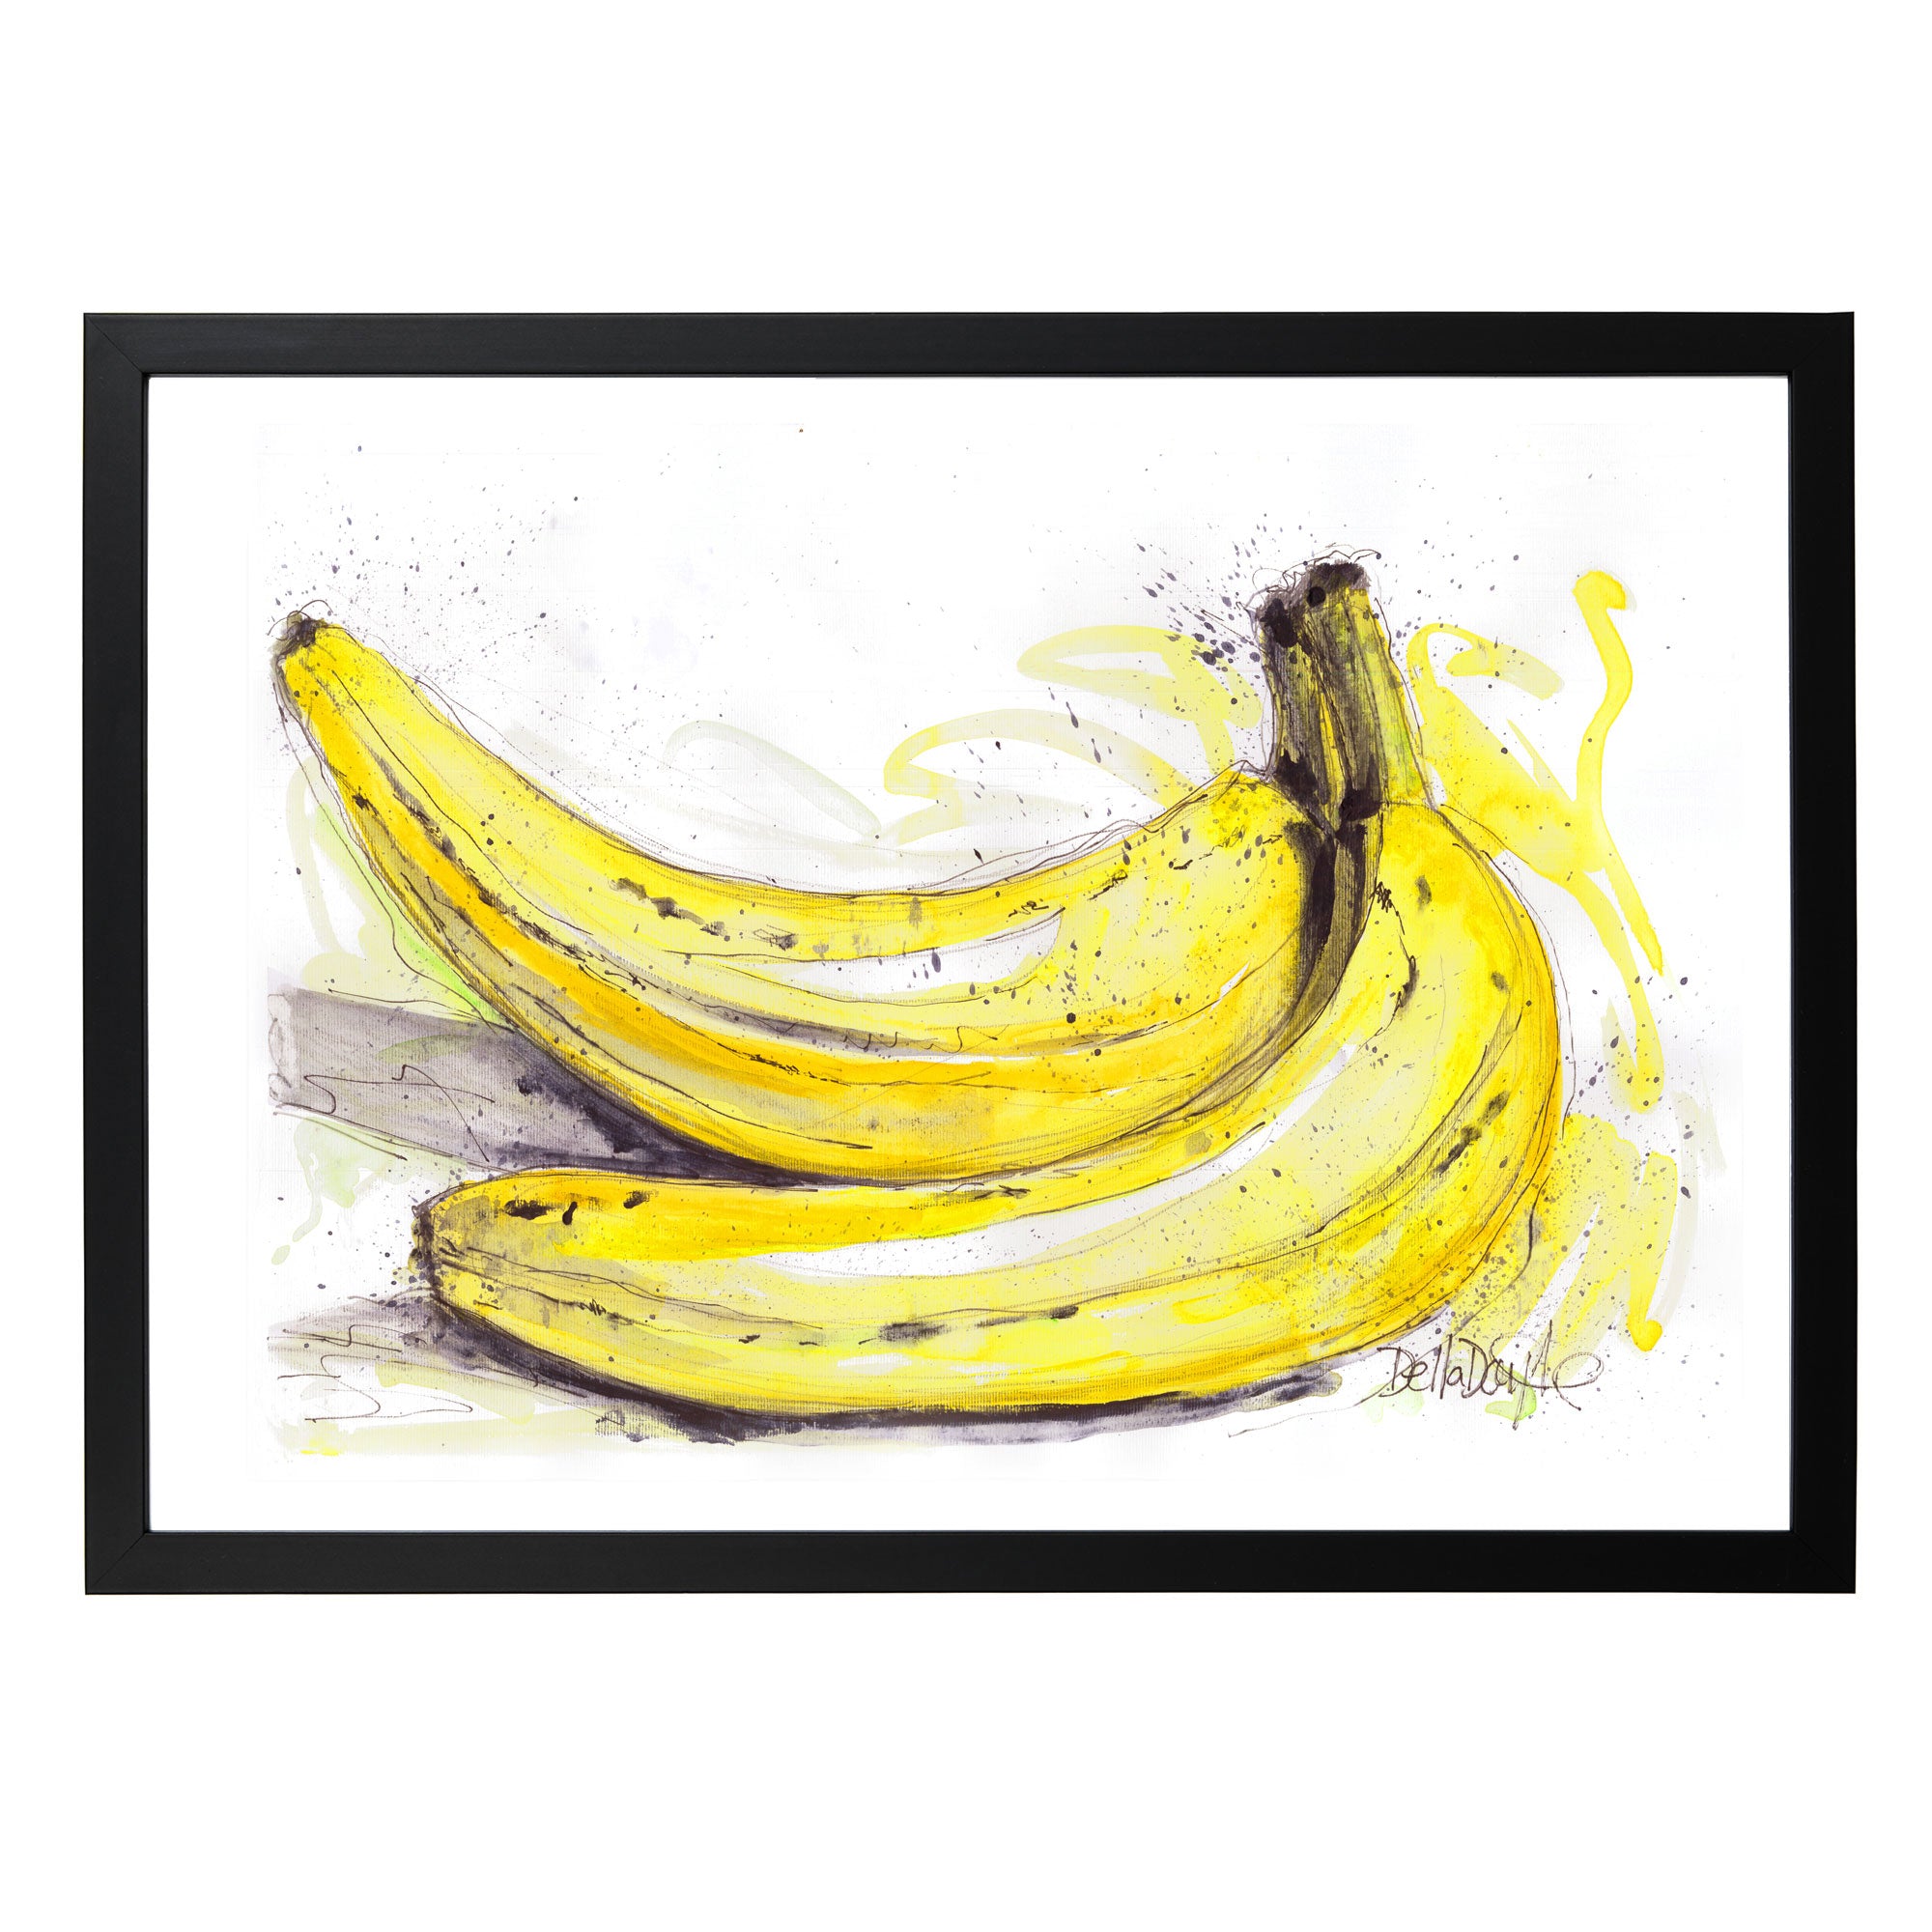 Banana Small - by Della Doyle